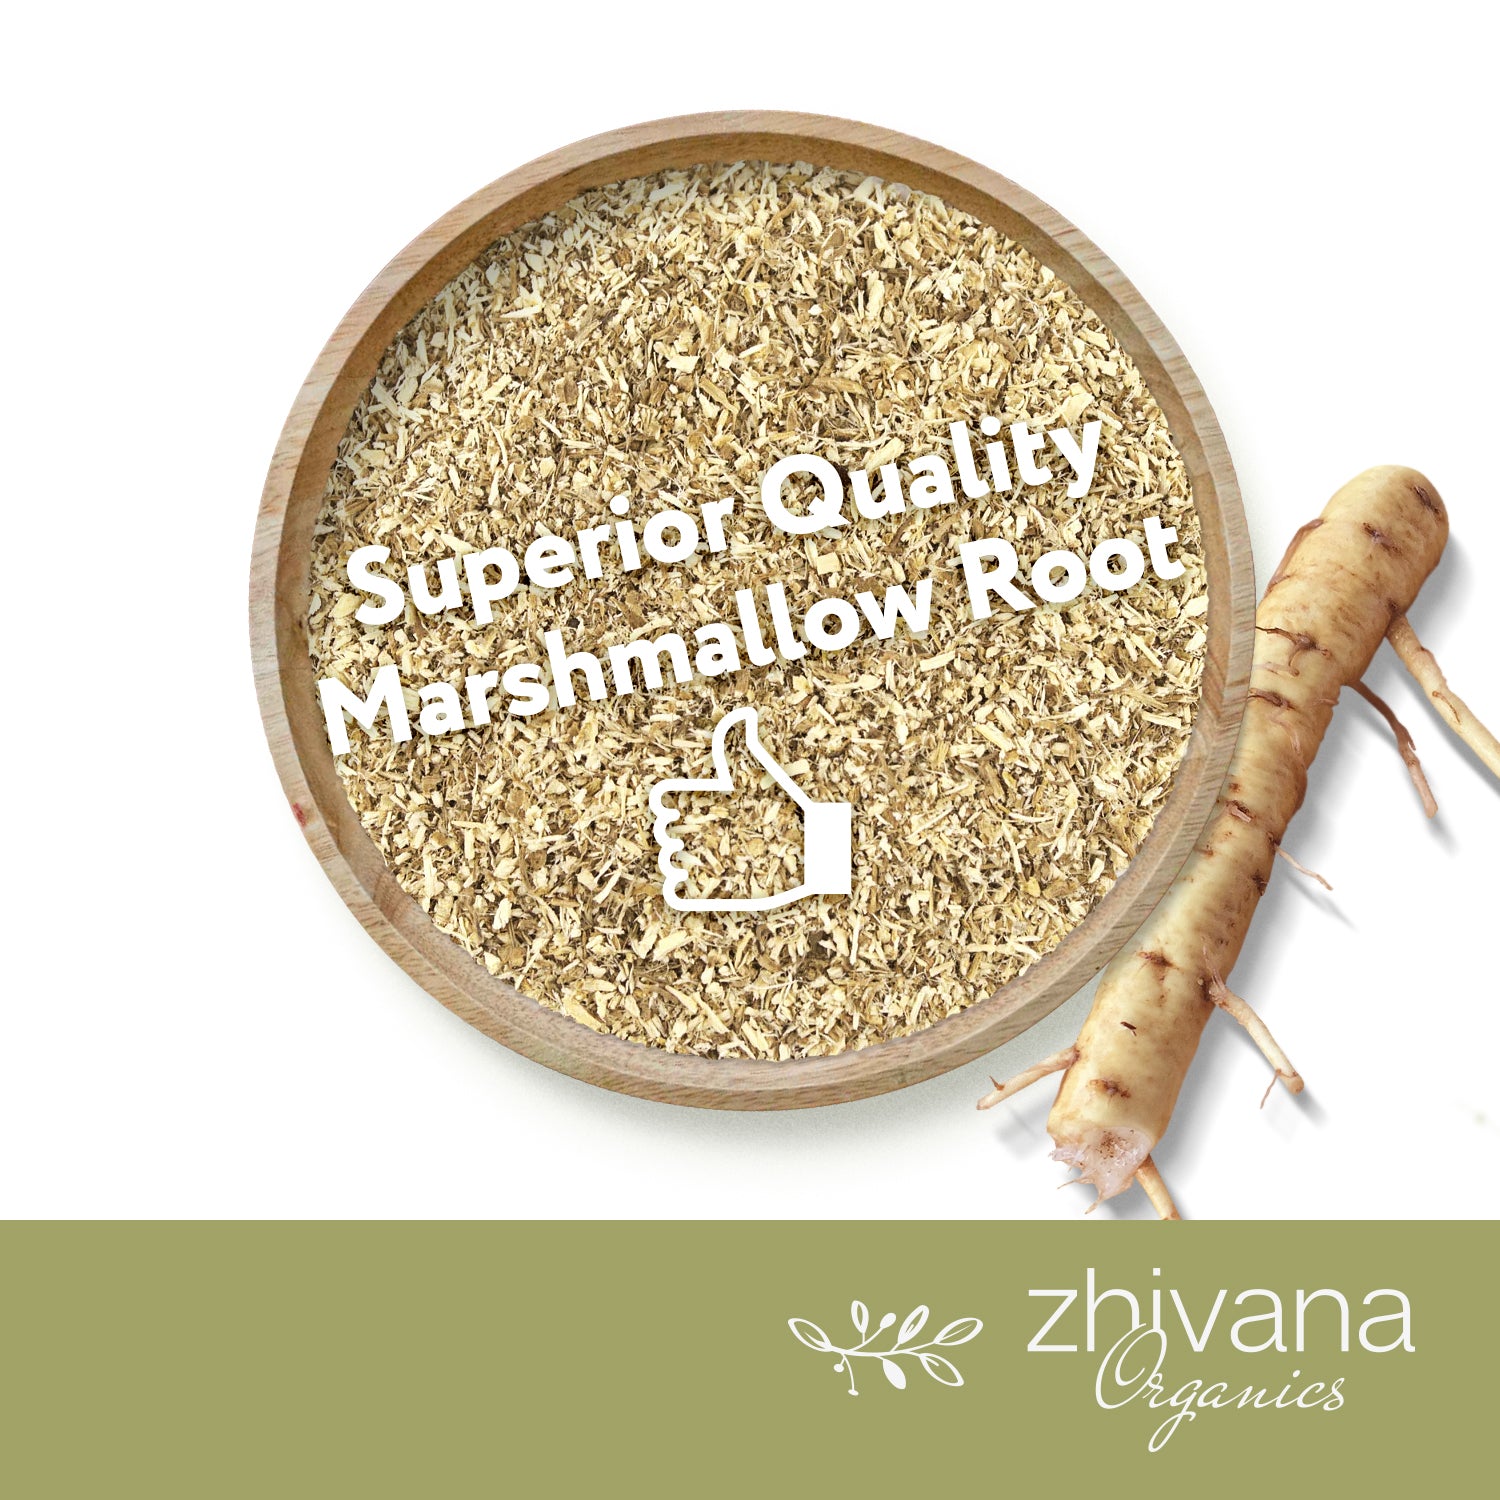 Marshmallow Root Dried Cut & Sifted - Zhivana Organics